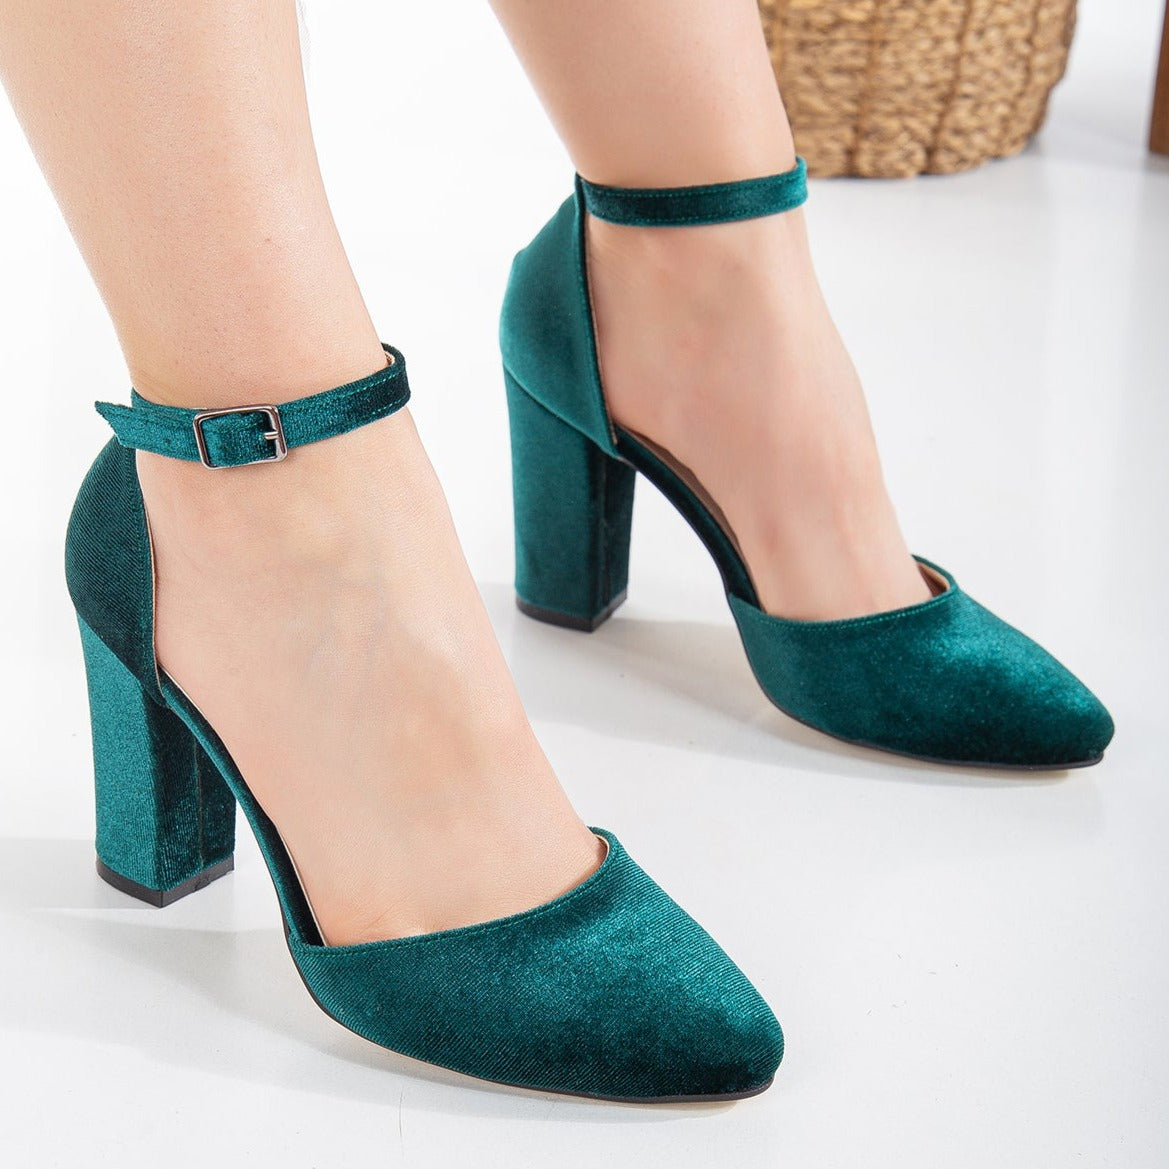 green velvet high heels, pearl ankle detail, women's shoes, elegant heels, luxury footwear, special occasion shoes, stylish high heels, fashion shoes, evening shoes, party shoes